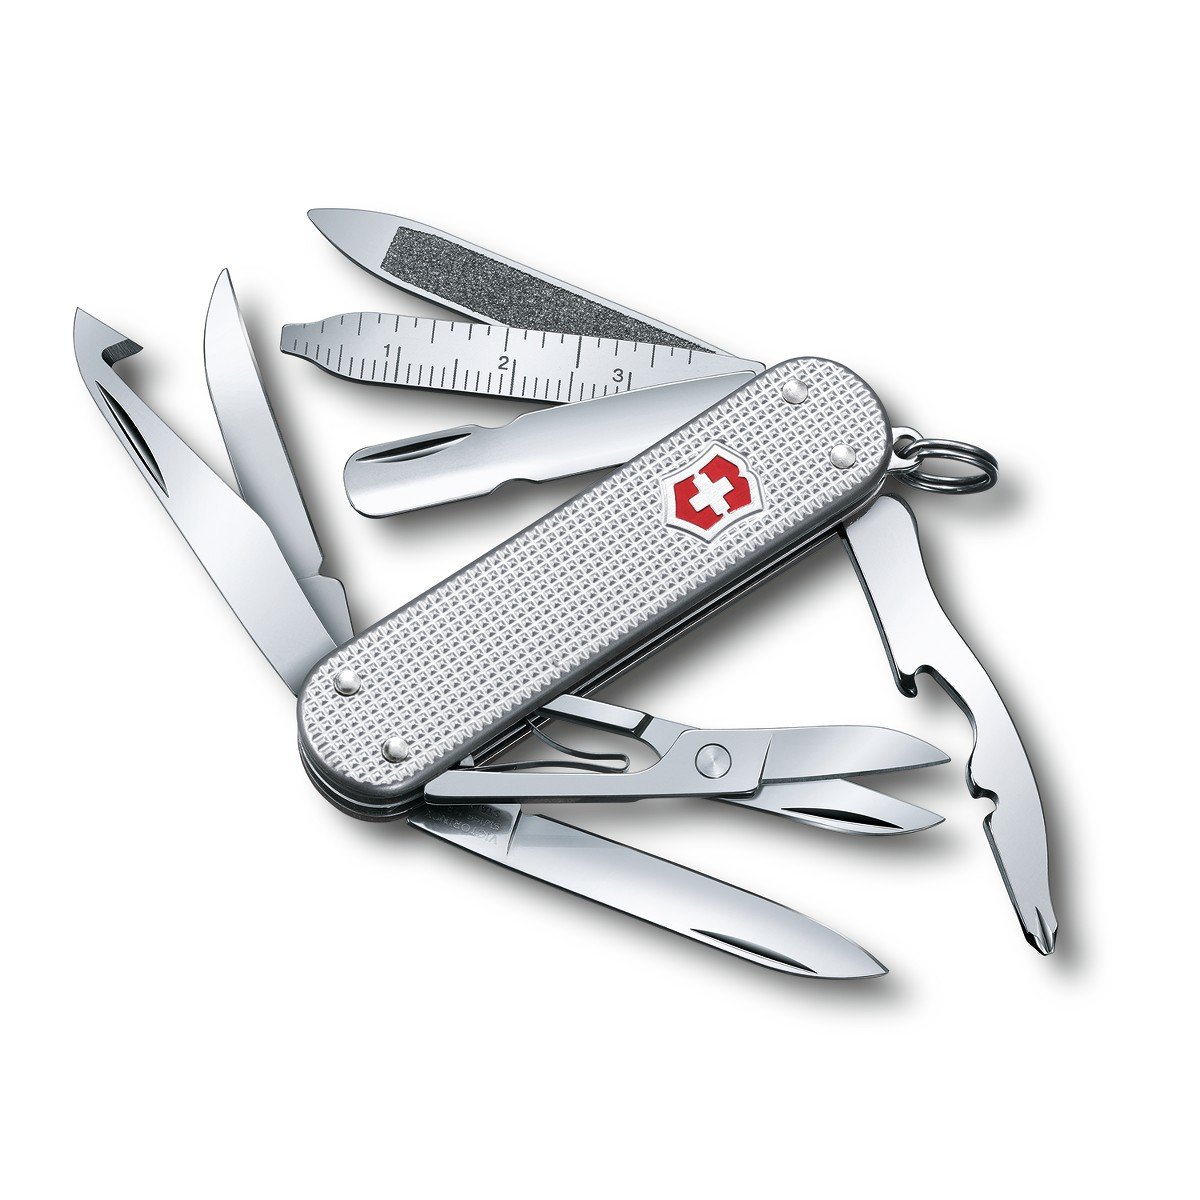 0.6381.26us2 Multi-tool - Minichamp Pocket Knife - Silver Alox